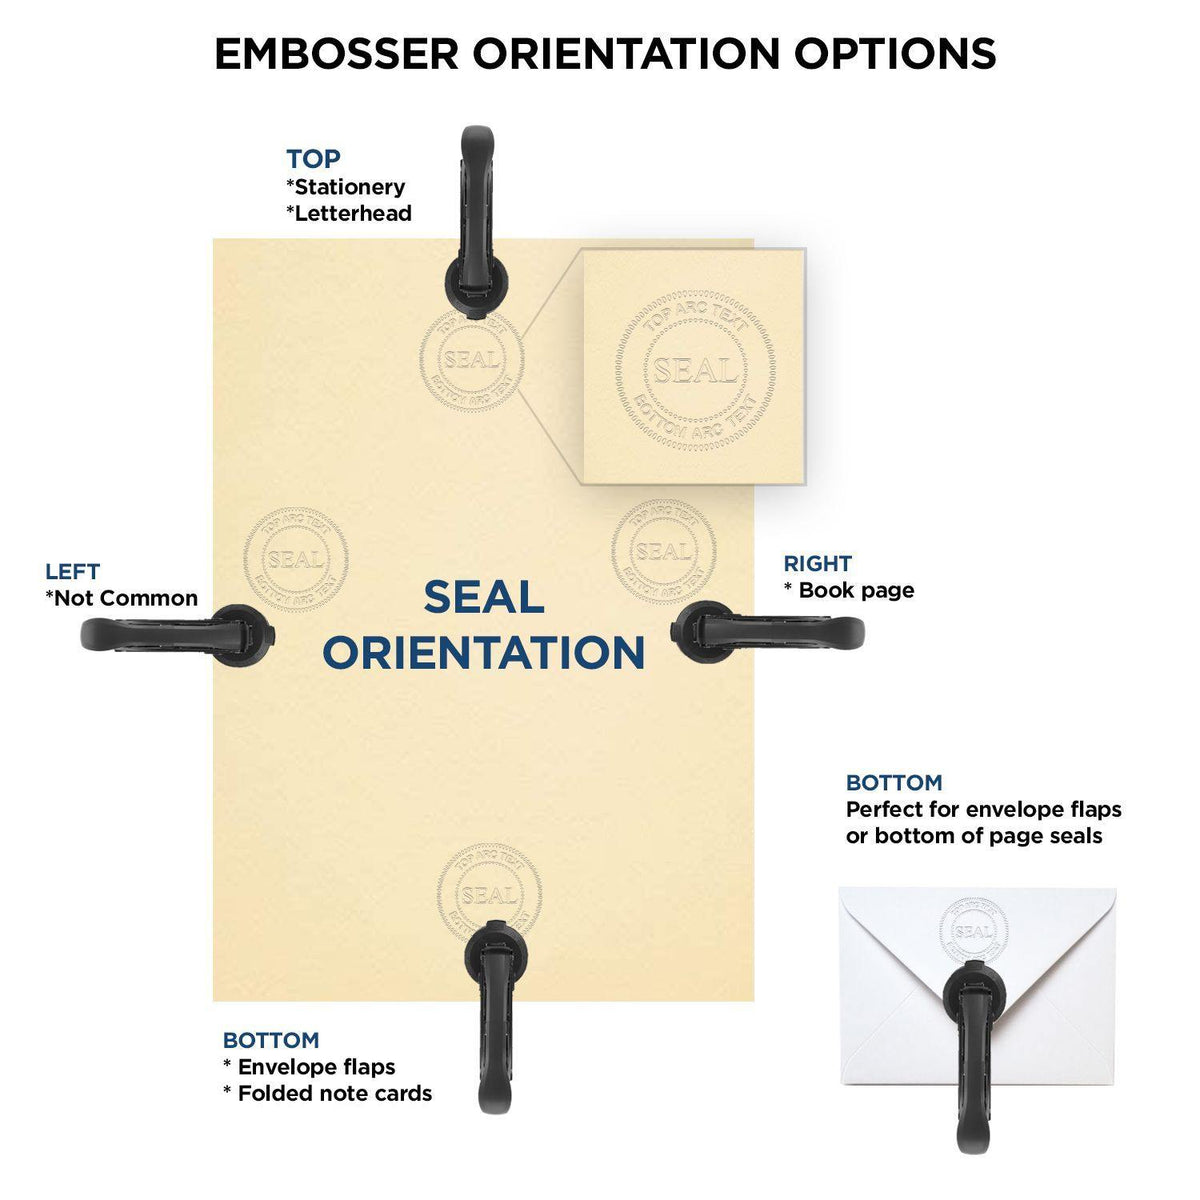 Real Estate Appraiser Pink Soft Seal Embosser - Engineer Seal Stamps - Embosser Type_Handheld, Embosser Type_Soft Seal, Type of Use_Professional